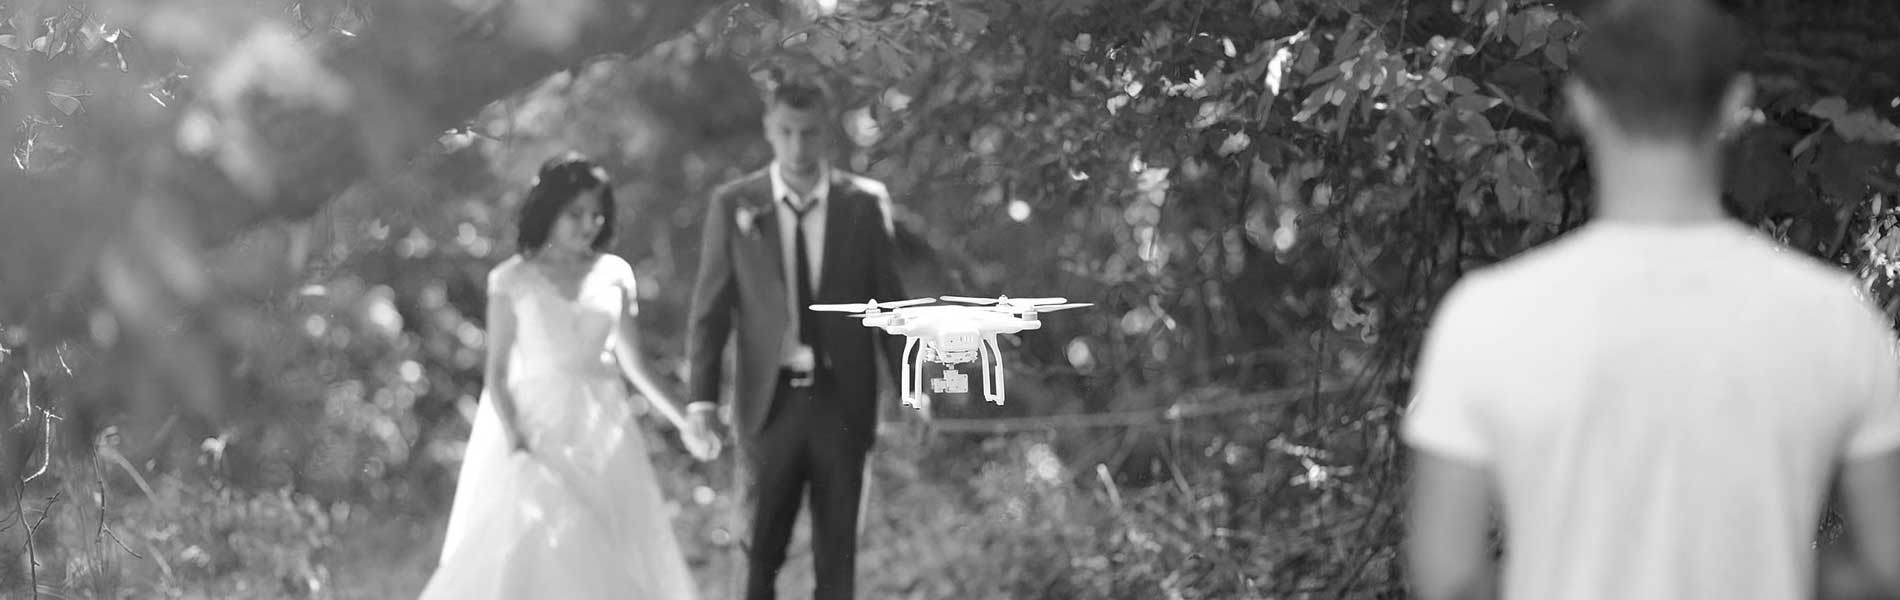 Location drone mariage